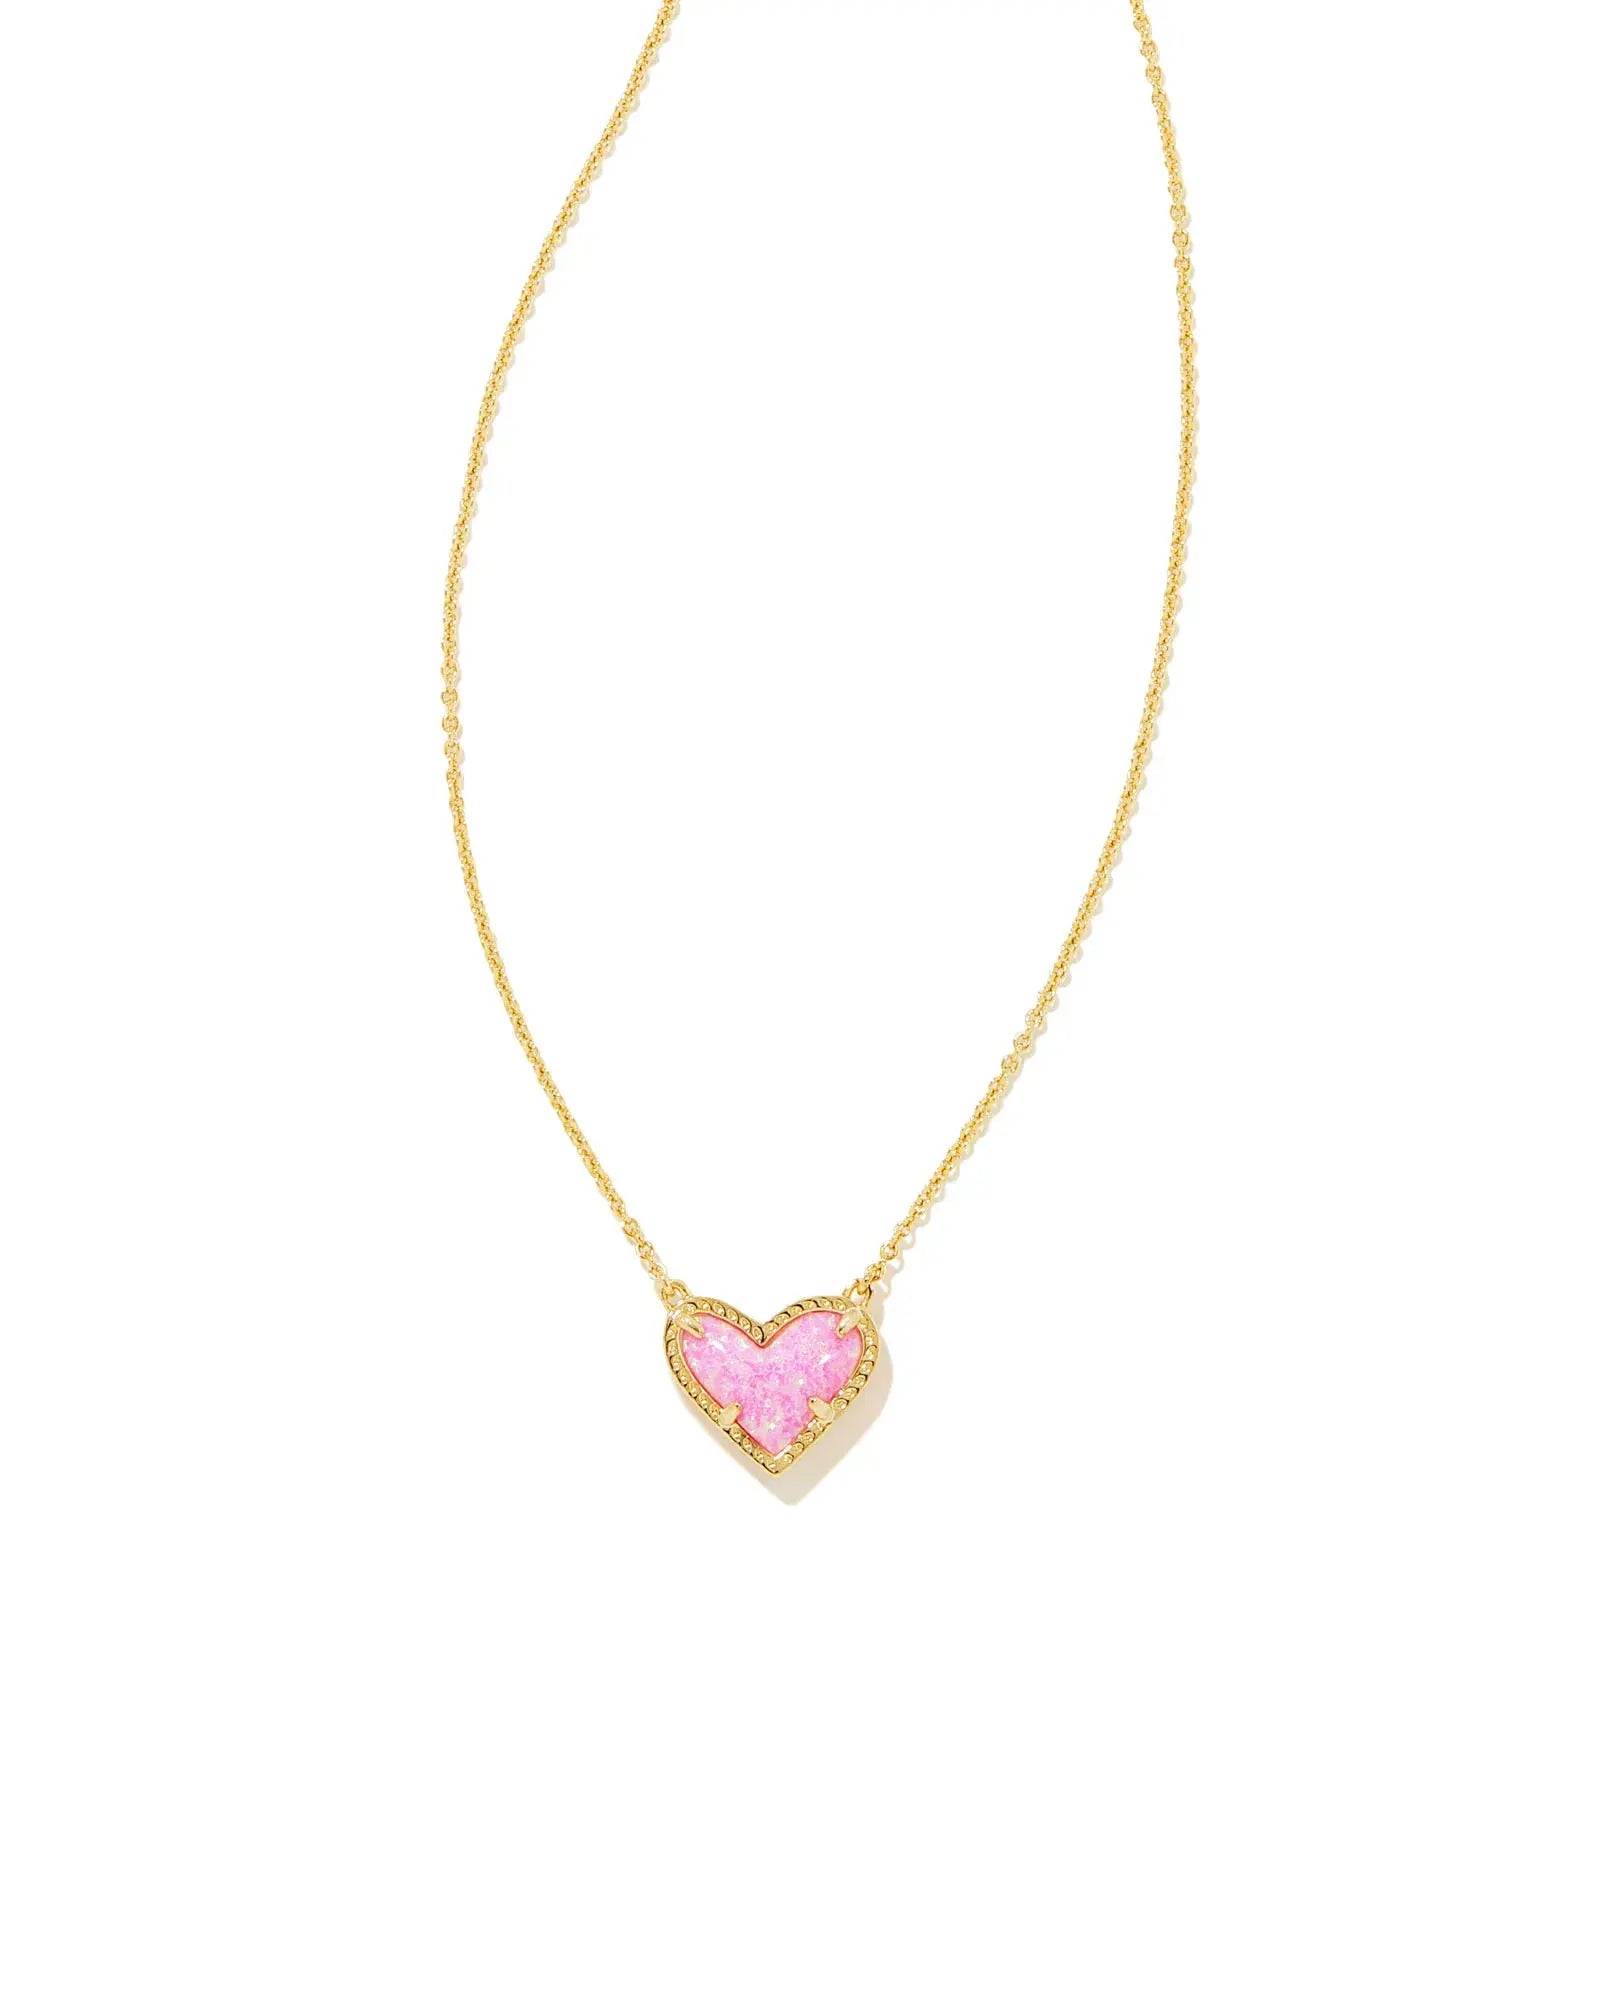 Ari Heart Pendant Necklace - Front View